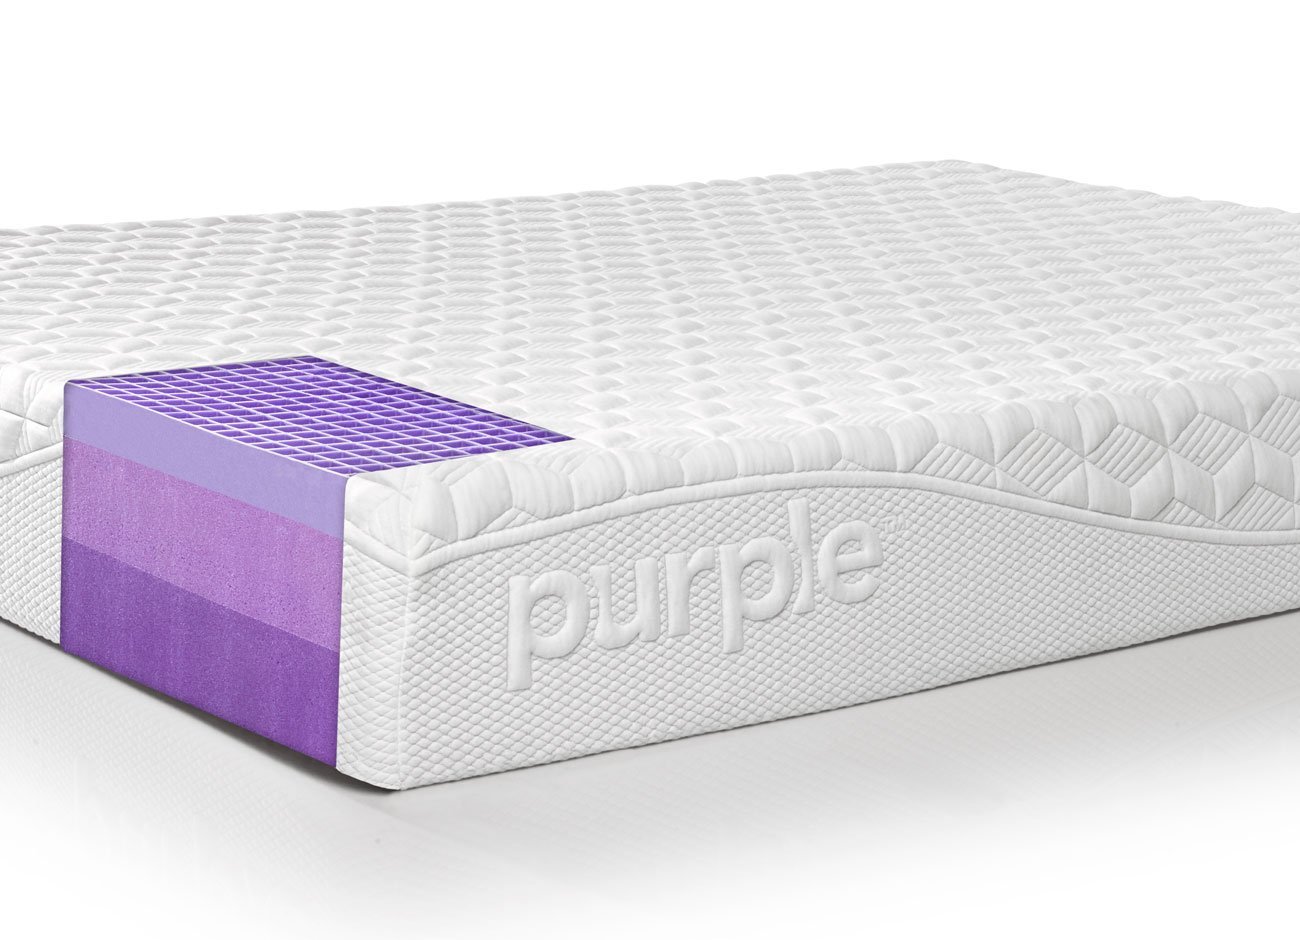 diy frame for the purple mattress